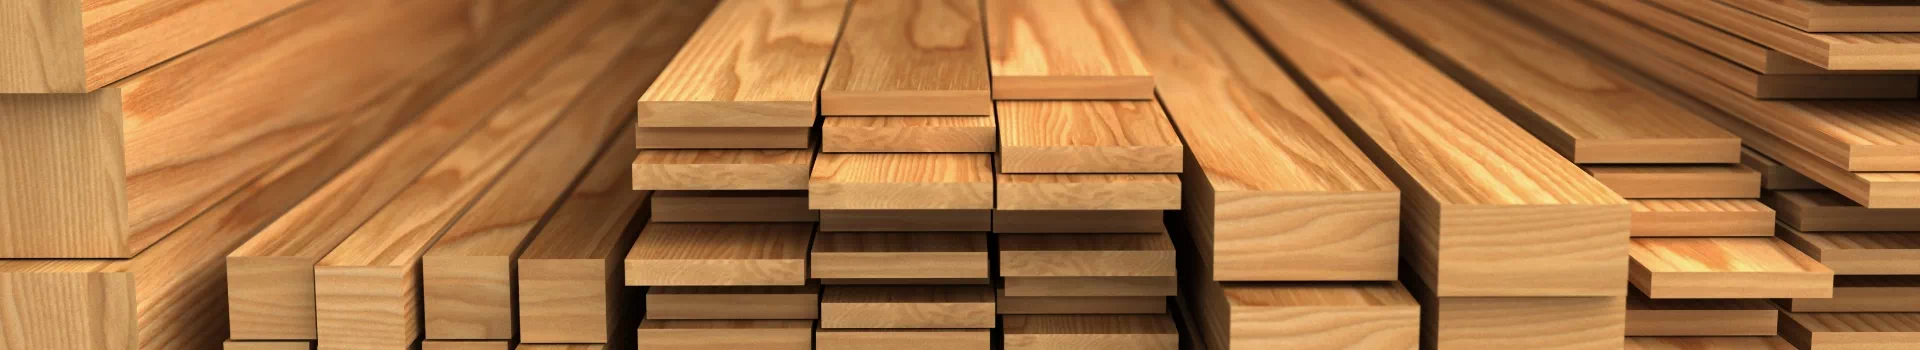 drewniane deski jedna na drugiej